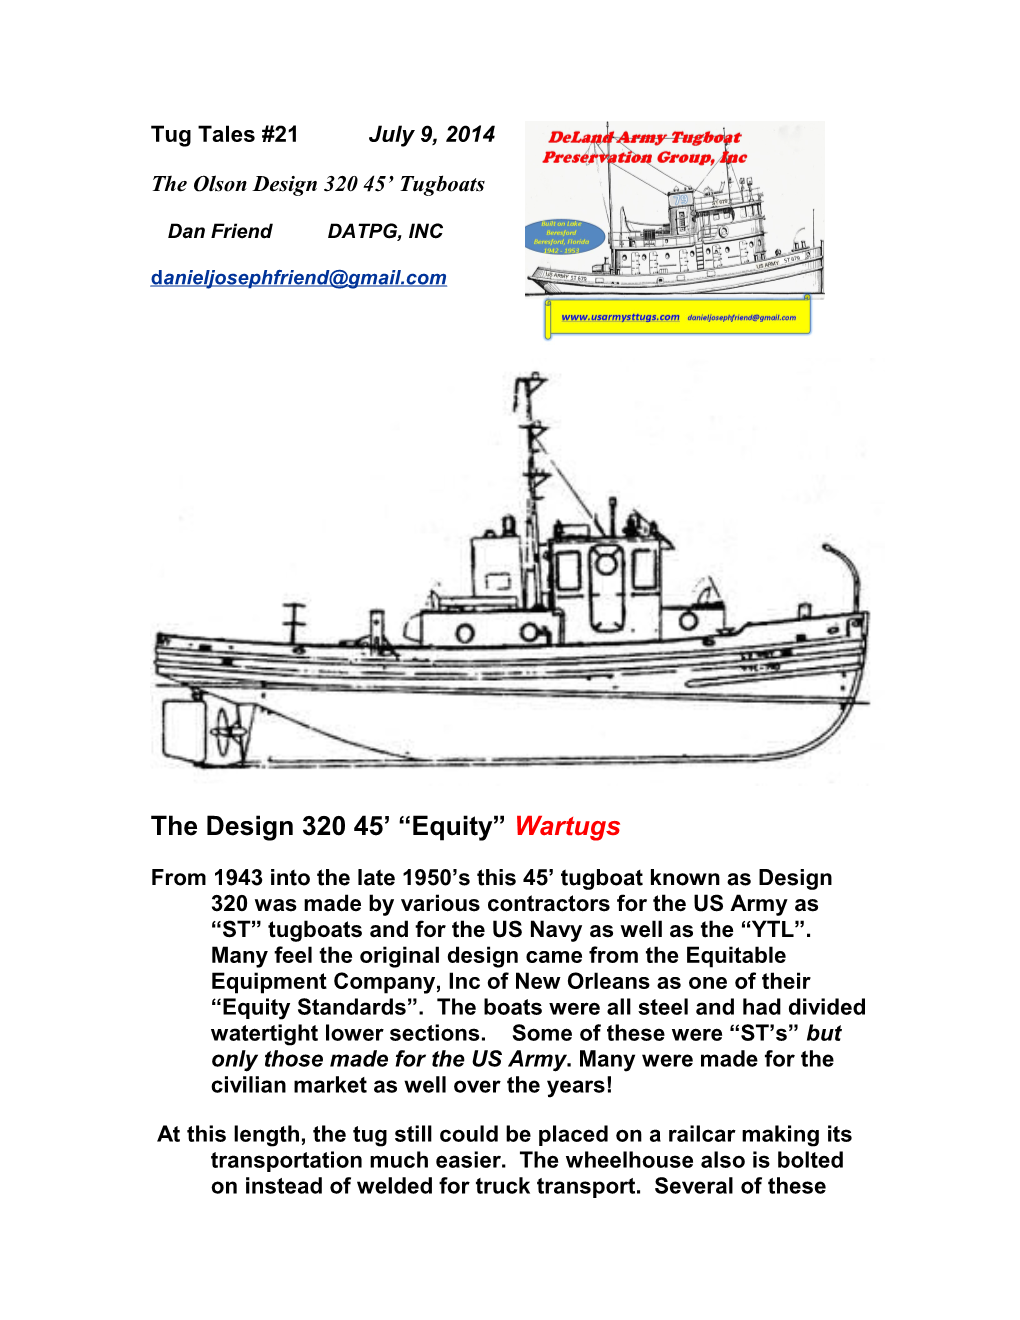 The Olson Design 320 45 Tugboats